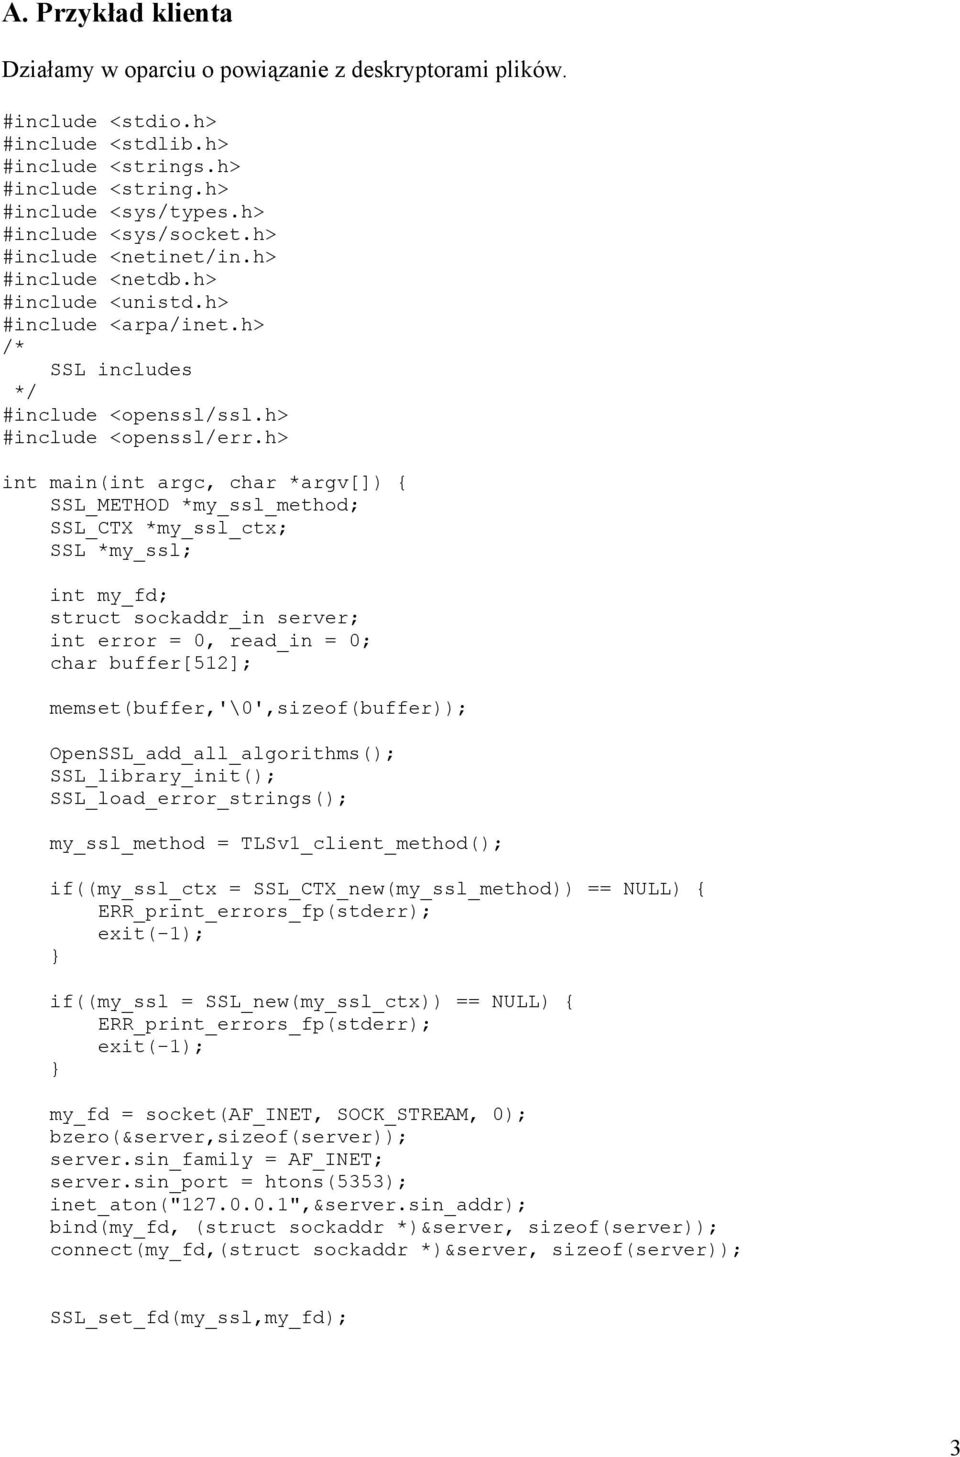 h> int main(int argc, char *argv[]) { int my_fd; struct sockaddr_in server; int error = 0, read_in = 0; char buffer[512]; memset(buffer,'\0',sizeof(buffer)); OpenSSL_add_all_algorithms();